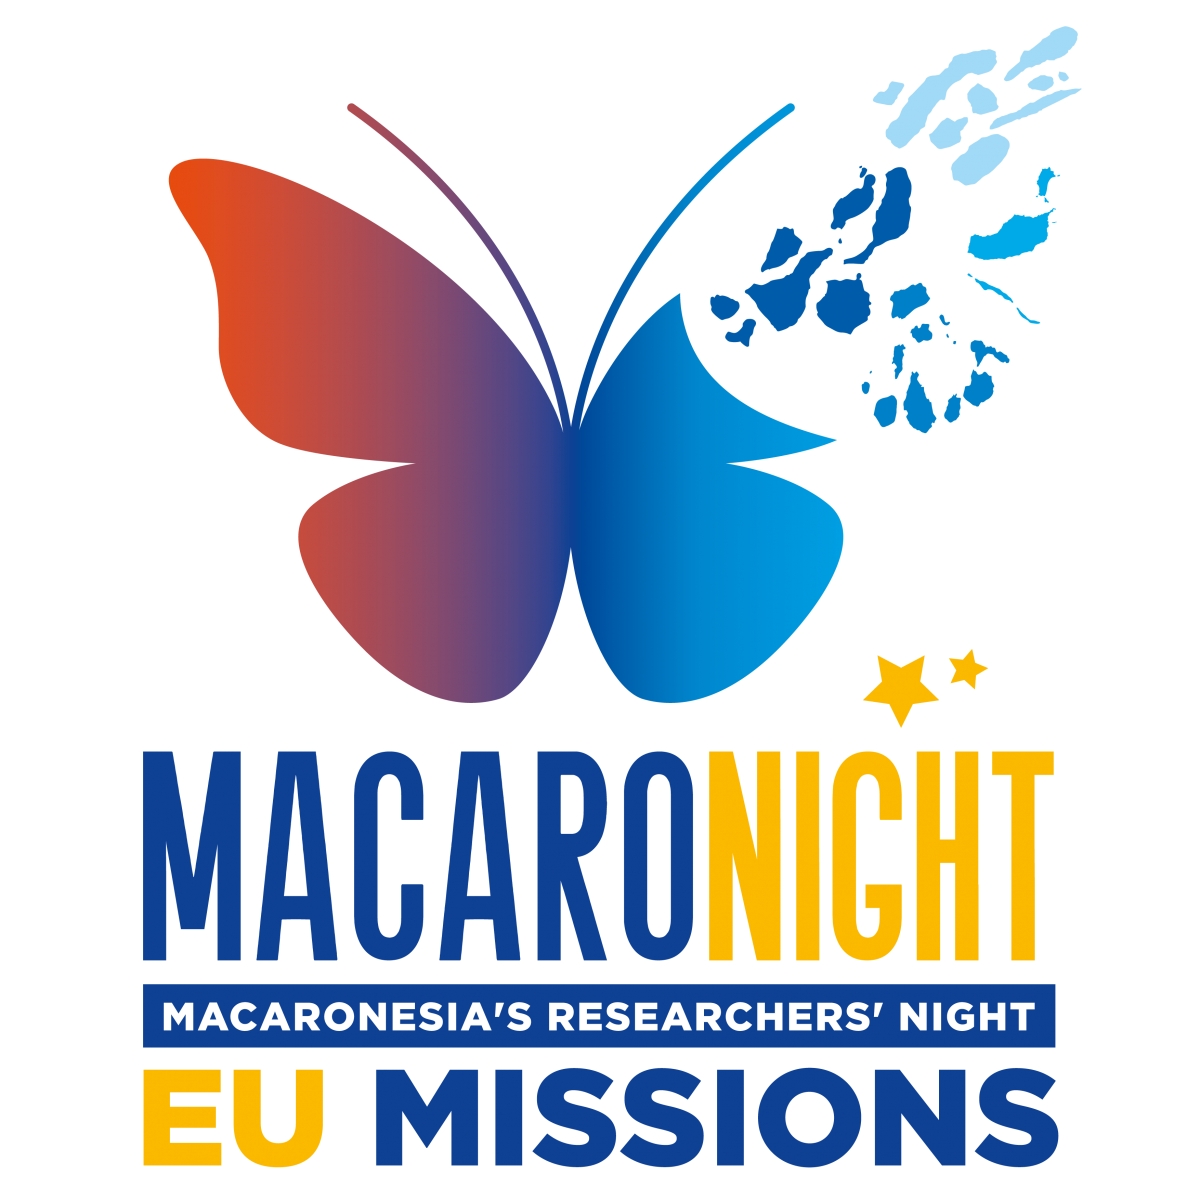 Logotipo de Macaronight 2022